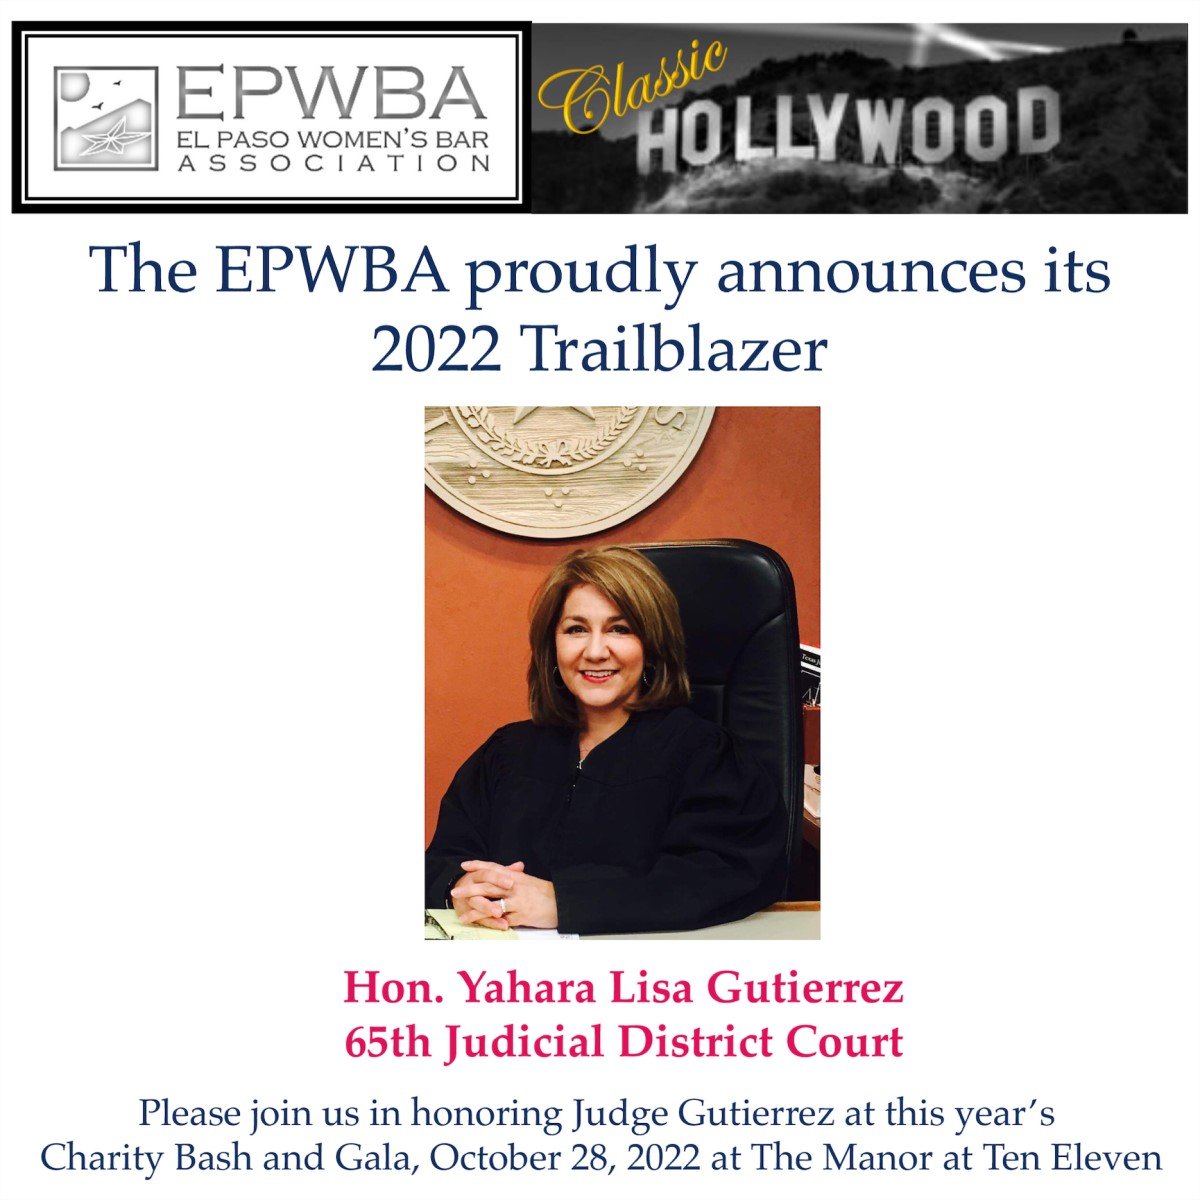 Congratulations to our 2022 Trailblazer, the Hon. Yahara Lisa Gutierrez.